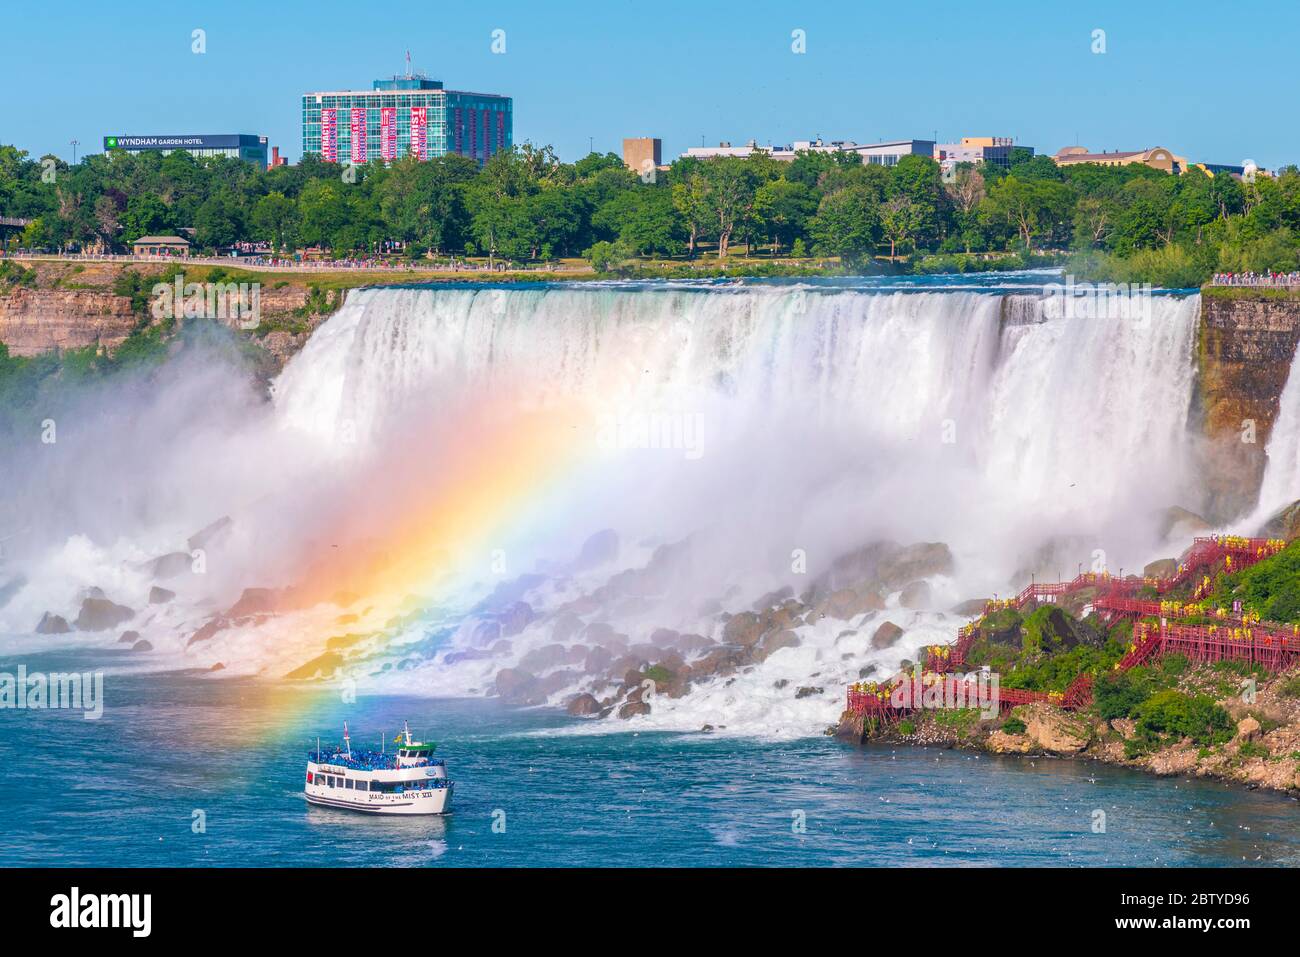 American Falls and Bridal Veil Falls, Niagara Falls, New York State, United States of America and Ontario, Canada, North America Stock Photo